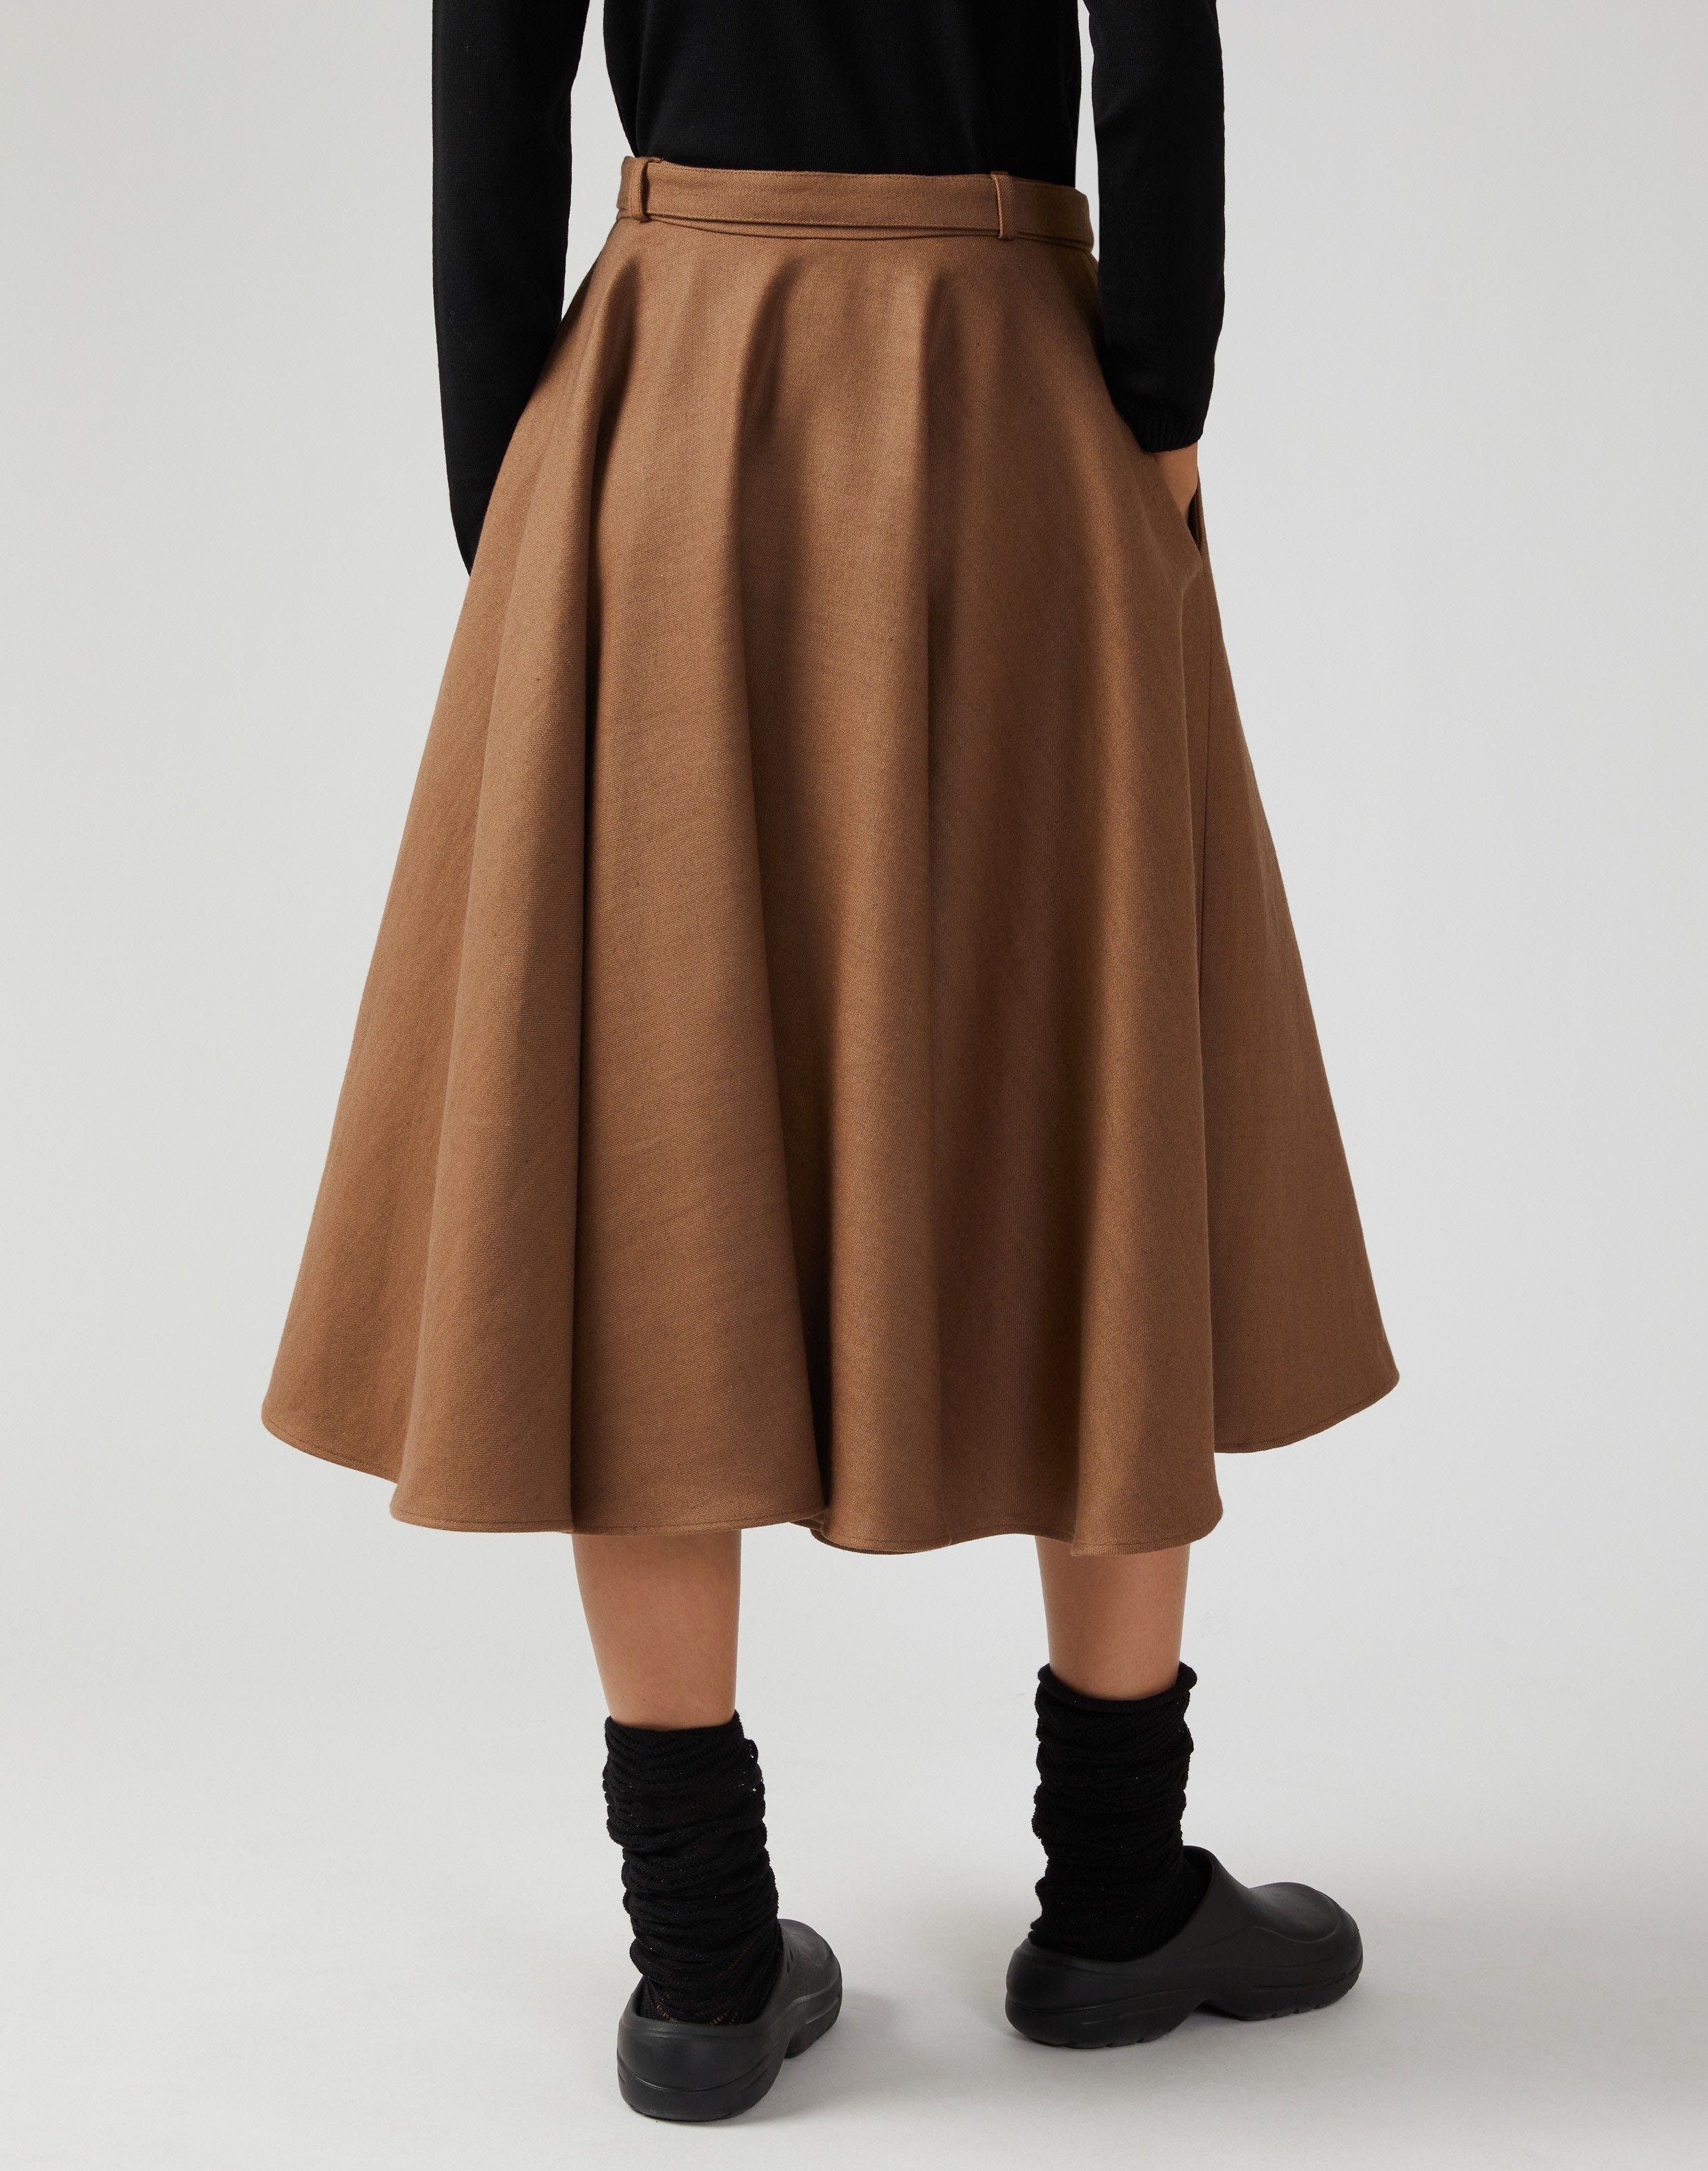 Flared midi skirt in brown wool twill